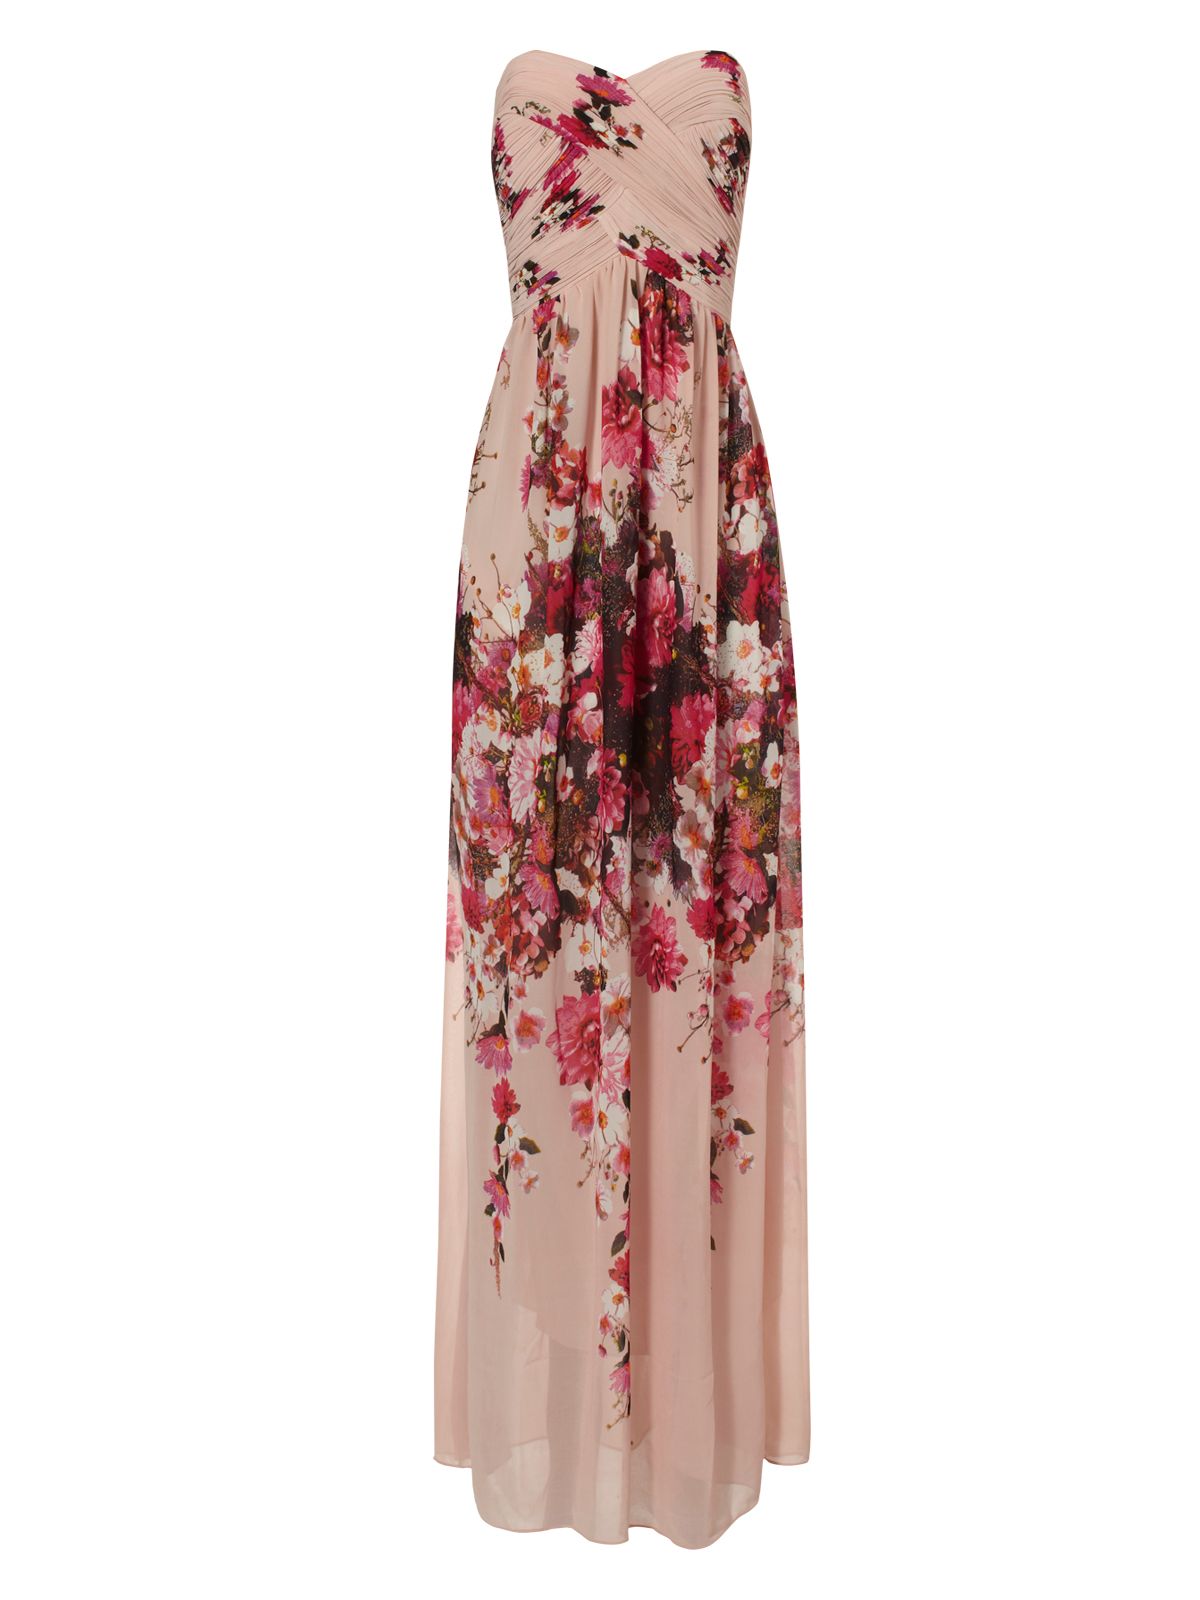 Jane norman Wild Flower Maxi Dress in Natural | Lyst